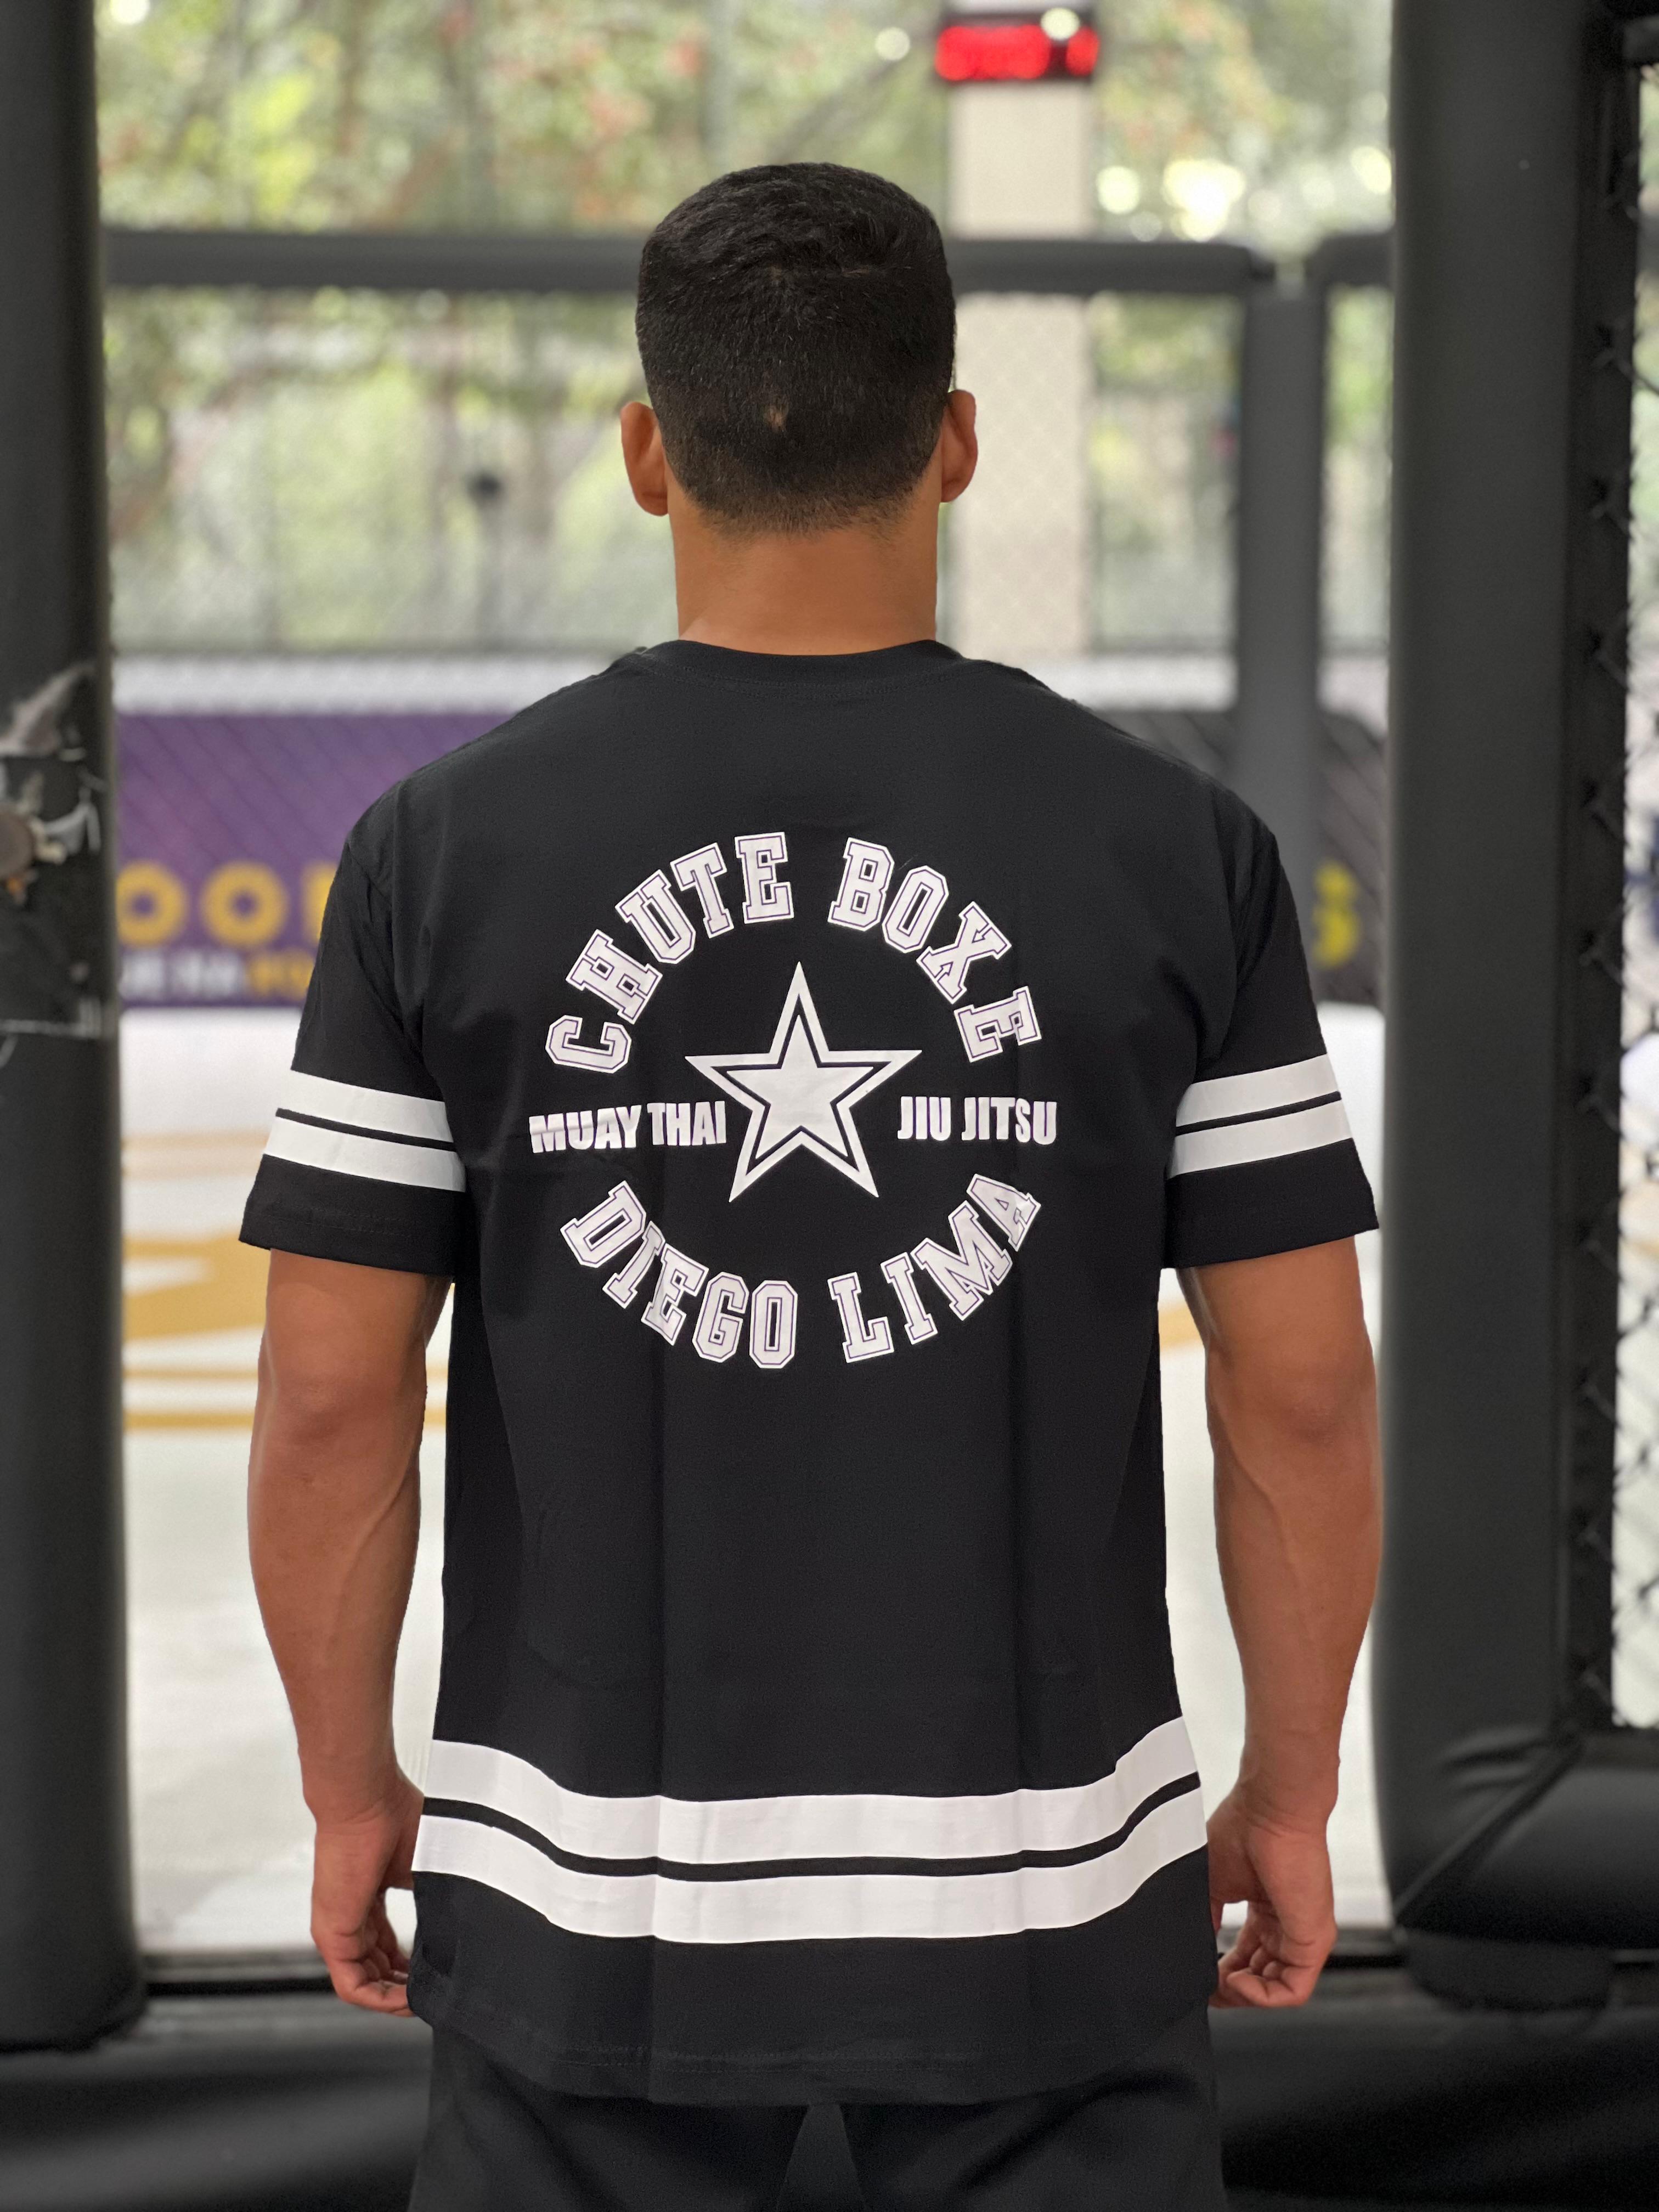 Camiseta Chute Boxe - Preto Listra Branca